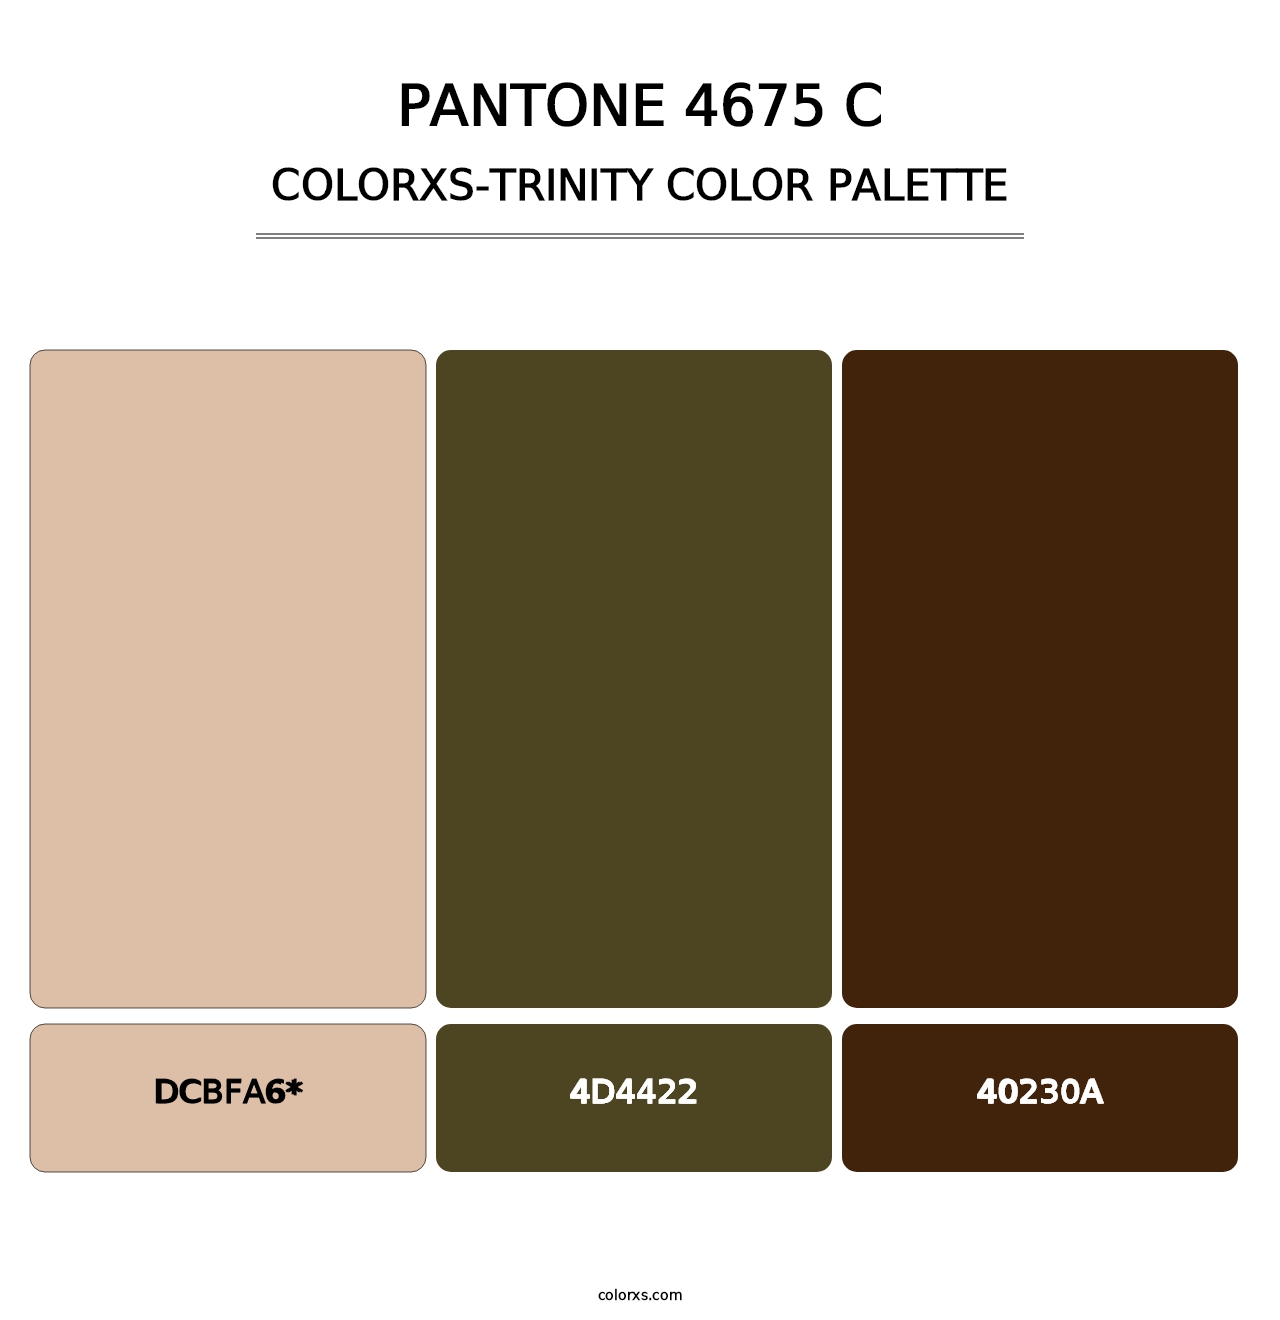 PANTONE 4675 C - Colorxs Trinity Palette